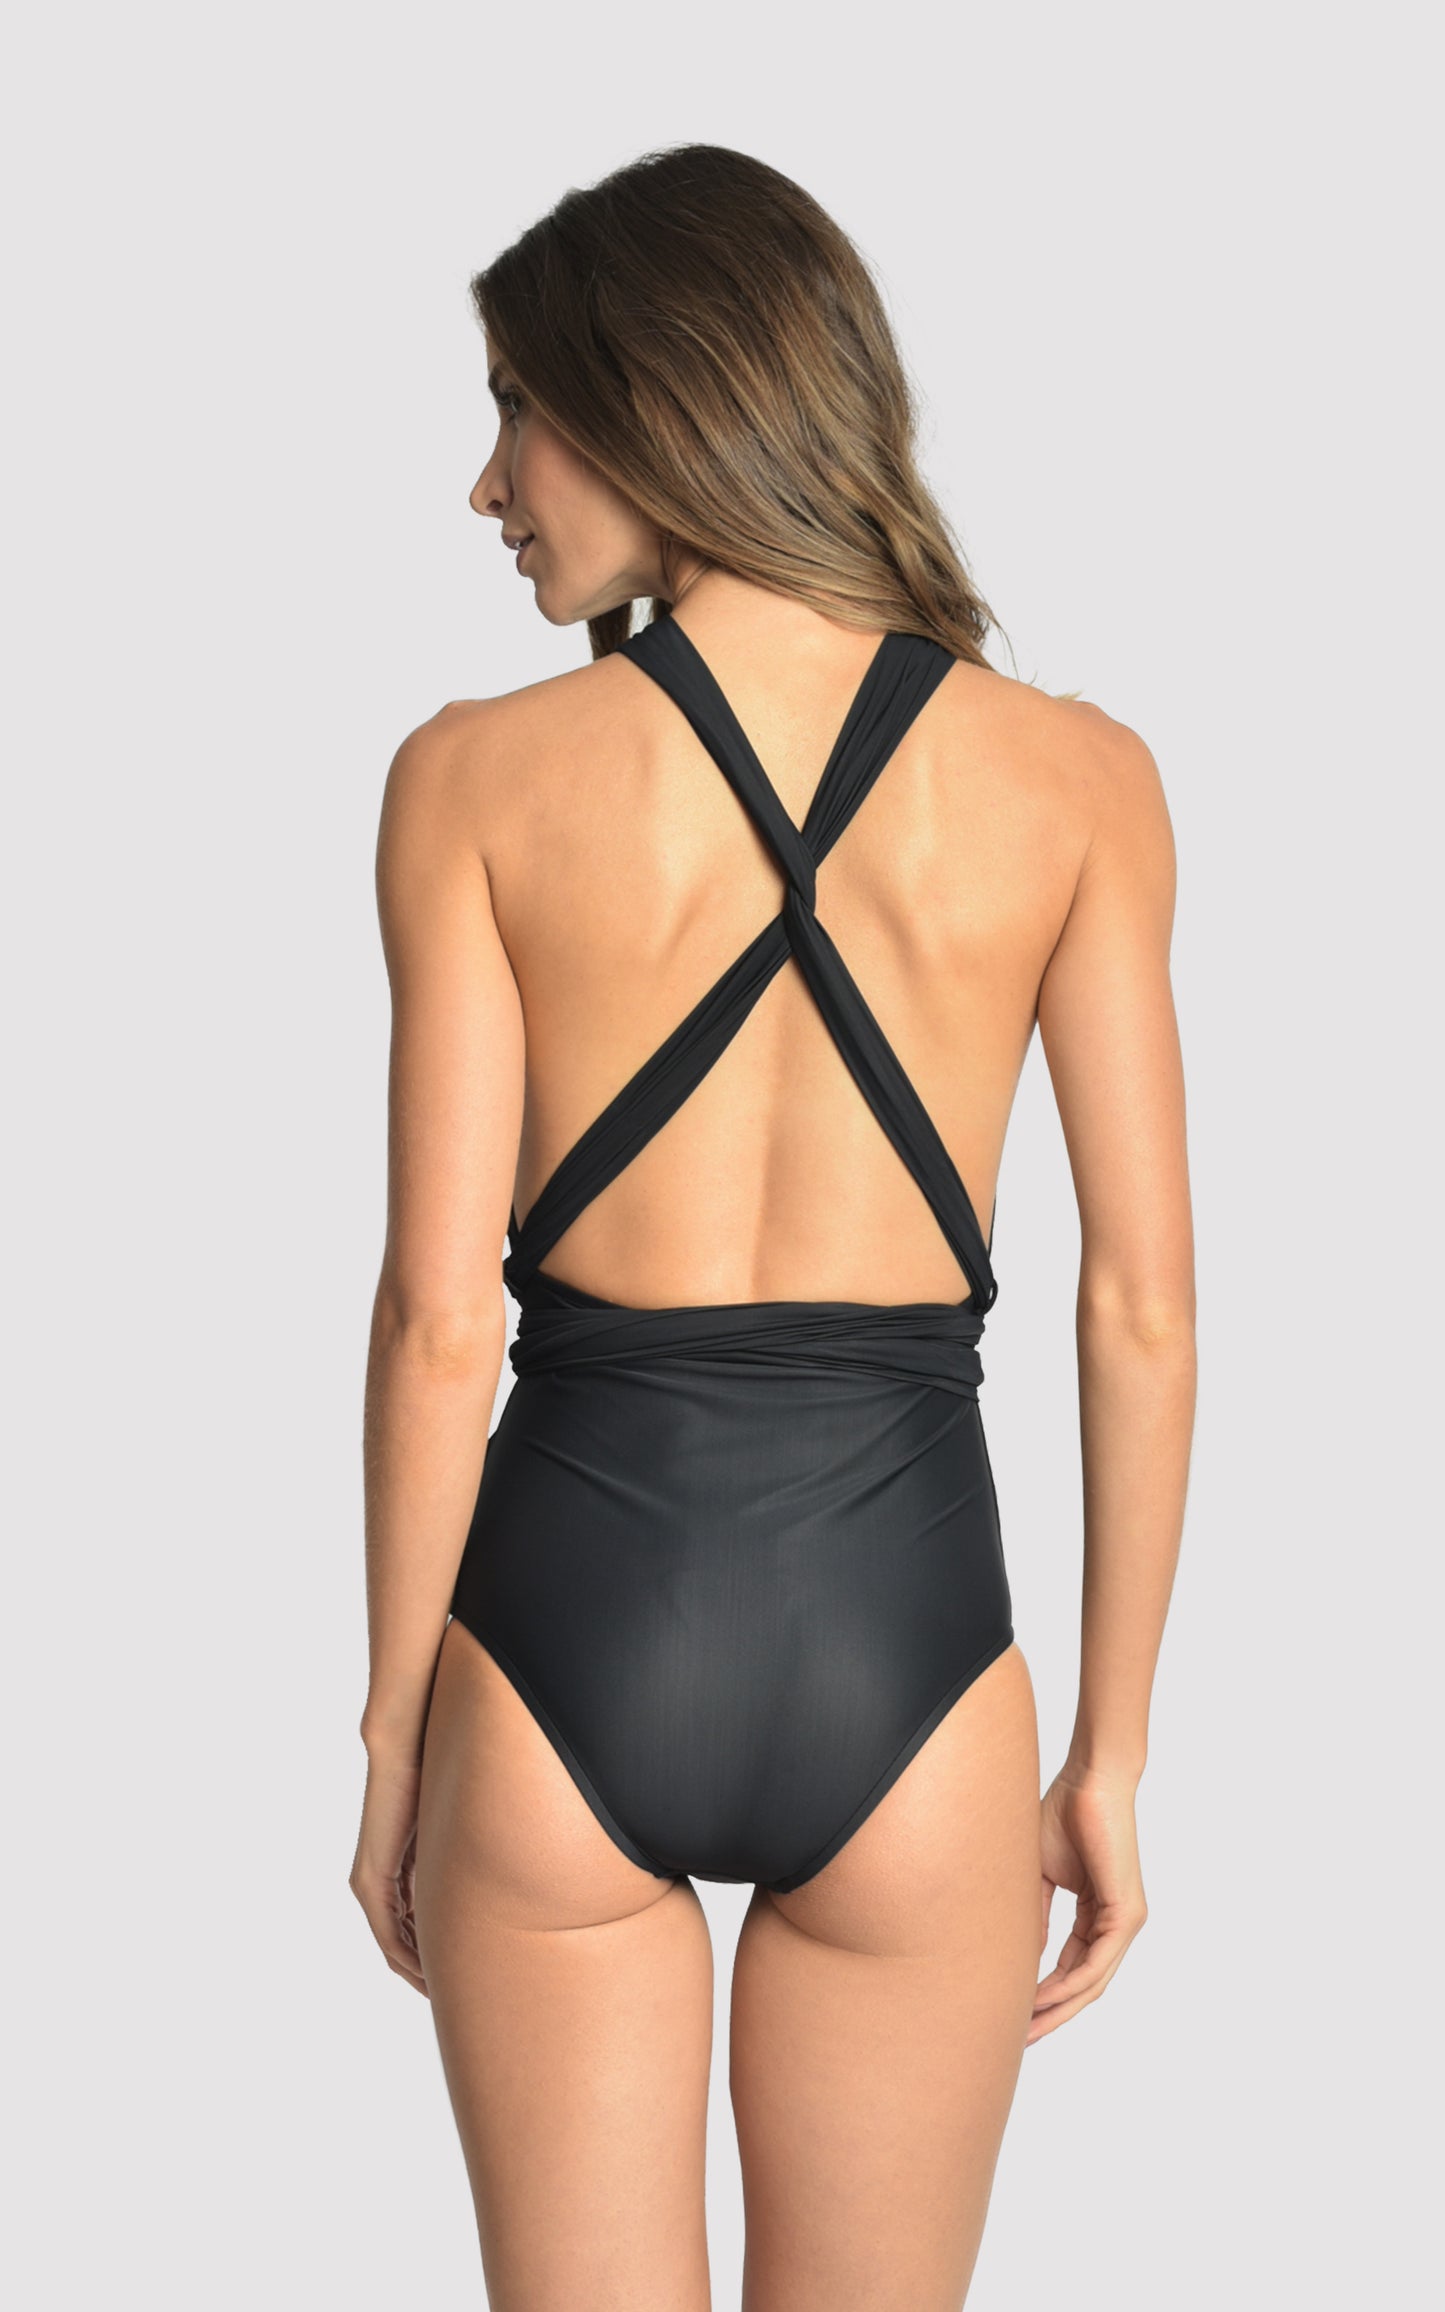 Chic black one-piece swimsuit